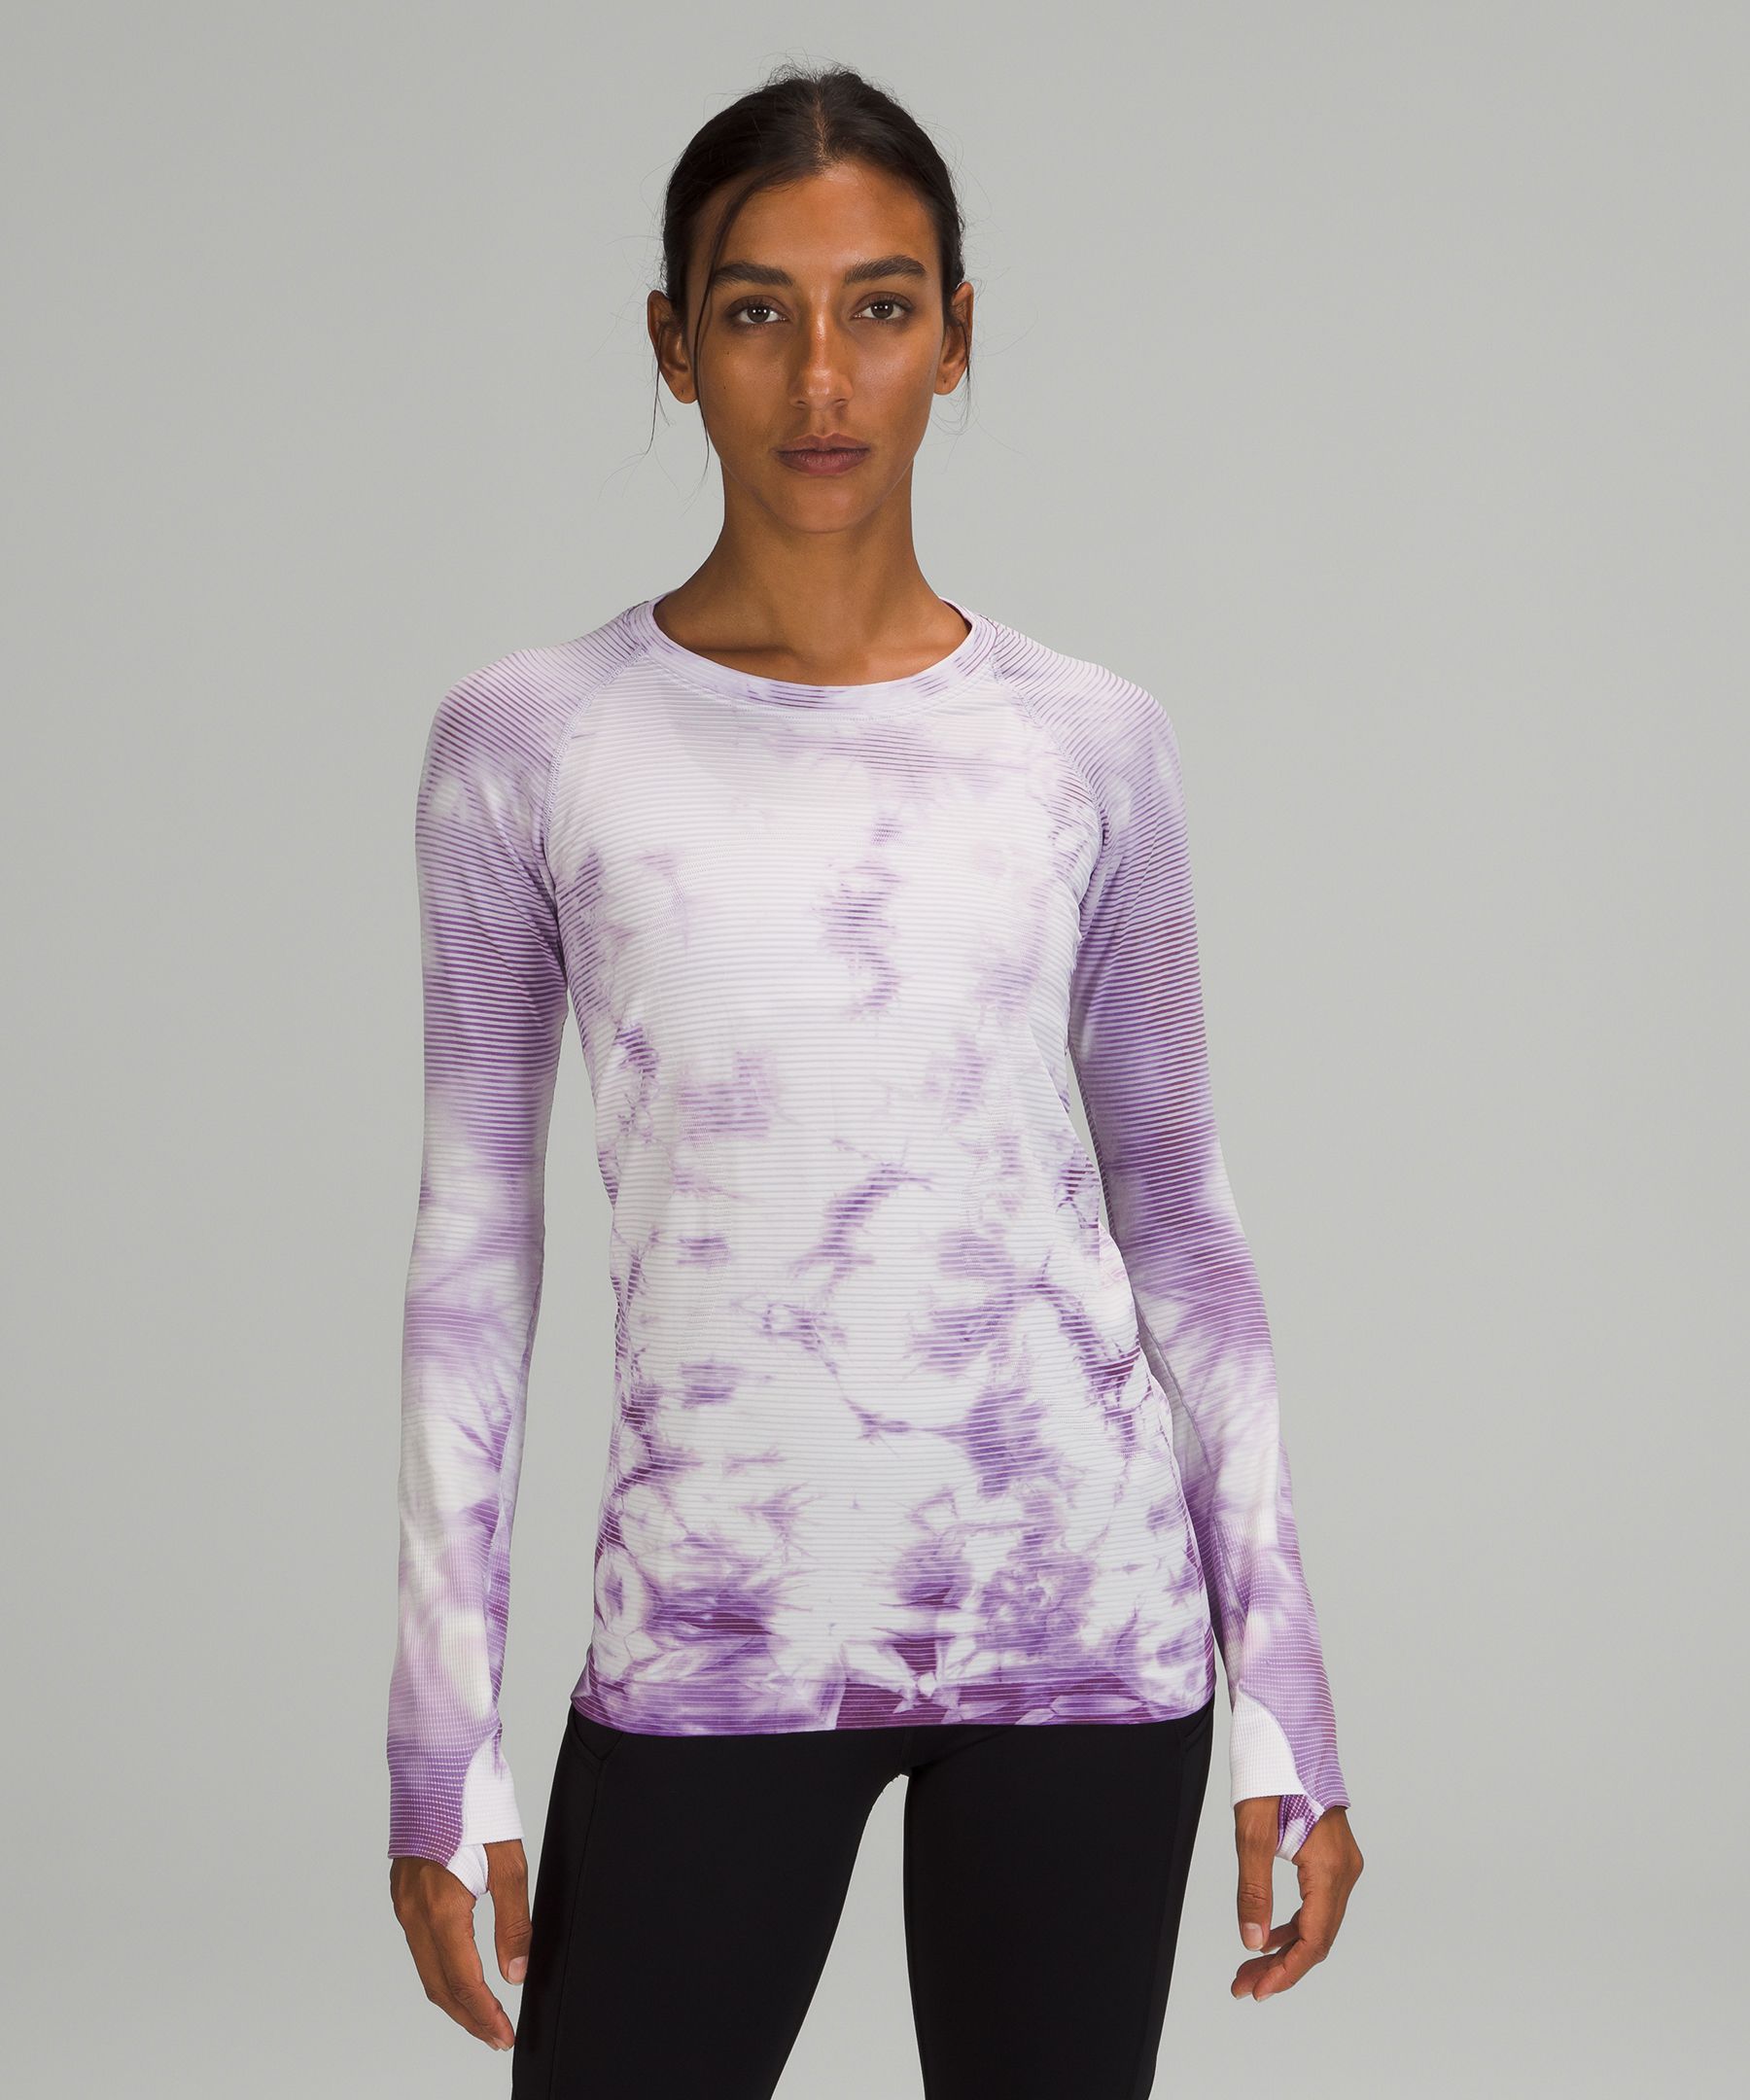 Lululemon Swiftly Tech Long Sleeve Shirt 2.0 In Shibori Stripe Wisteria Purple